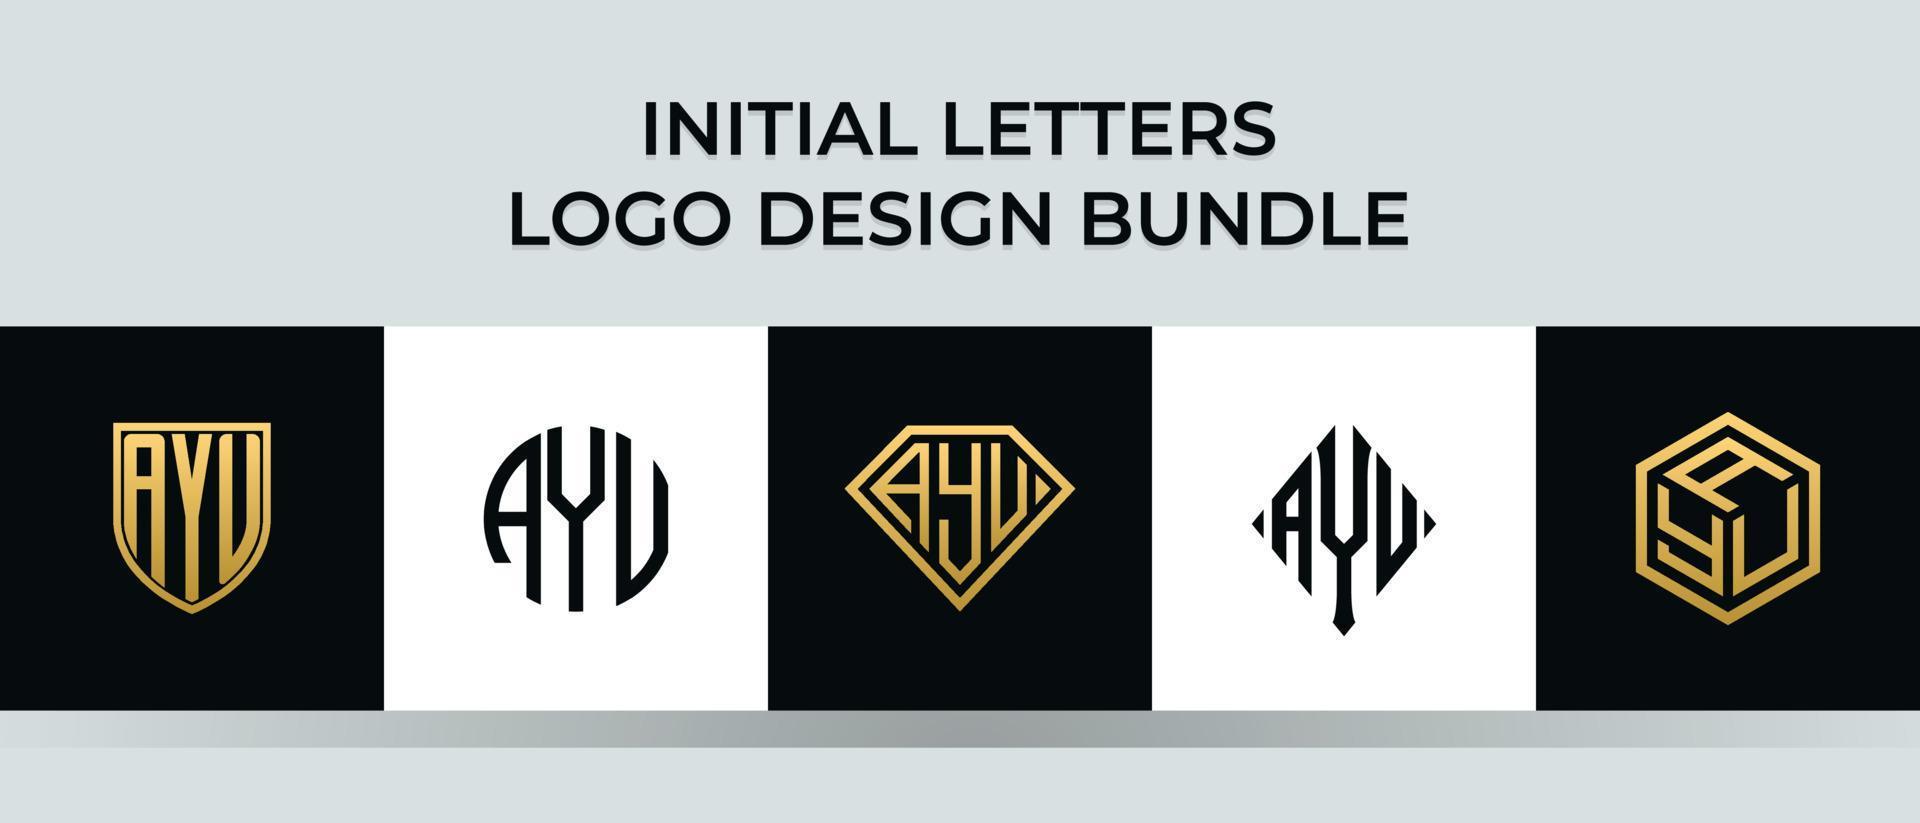 Initial letters AYU logo designs Bundle vector